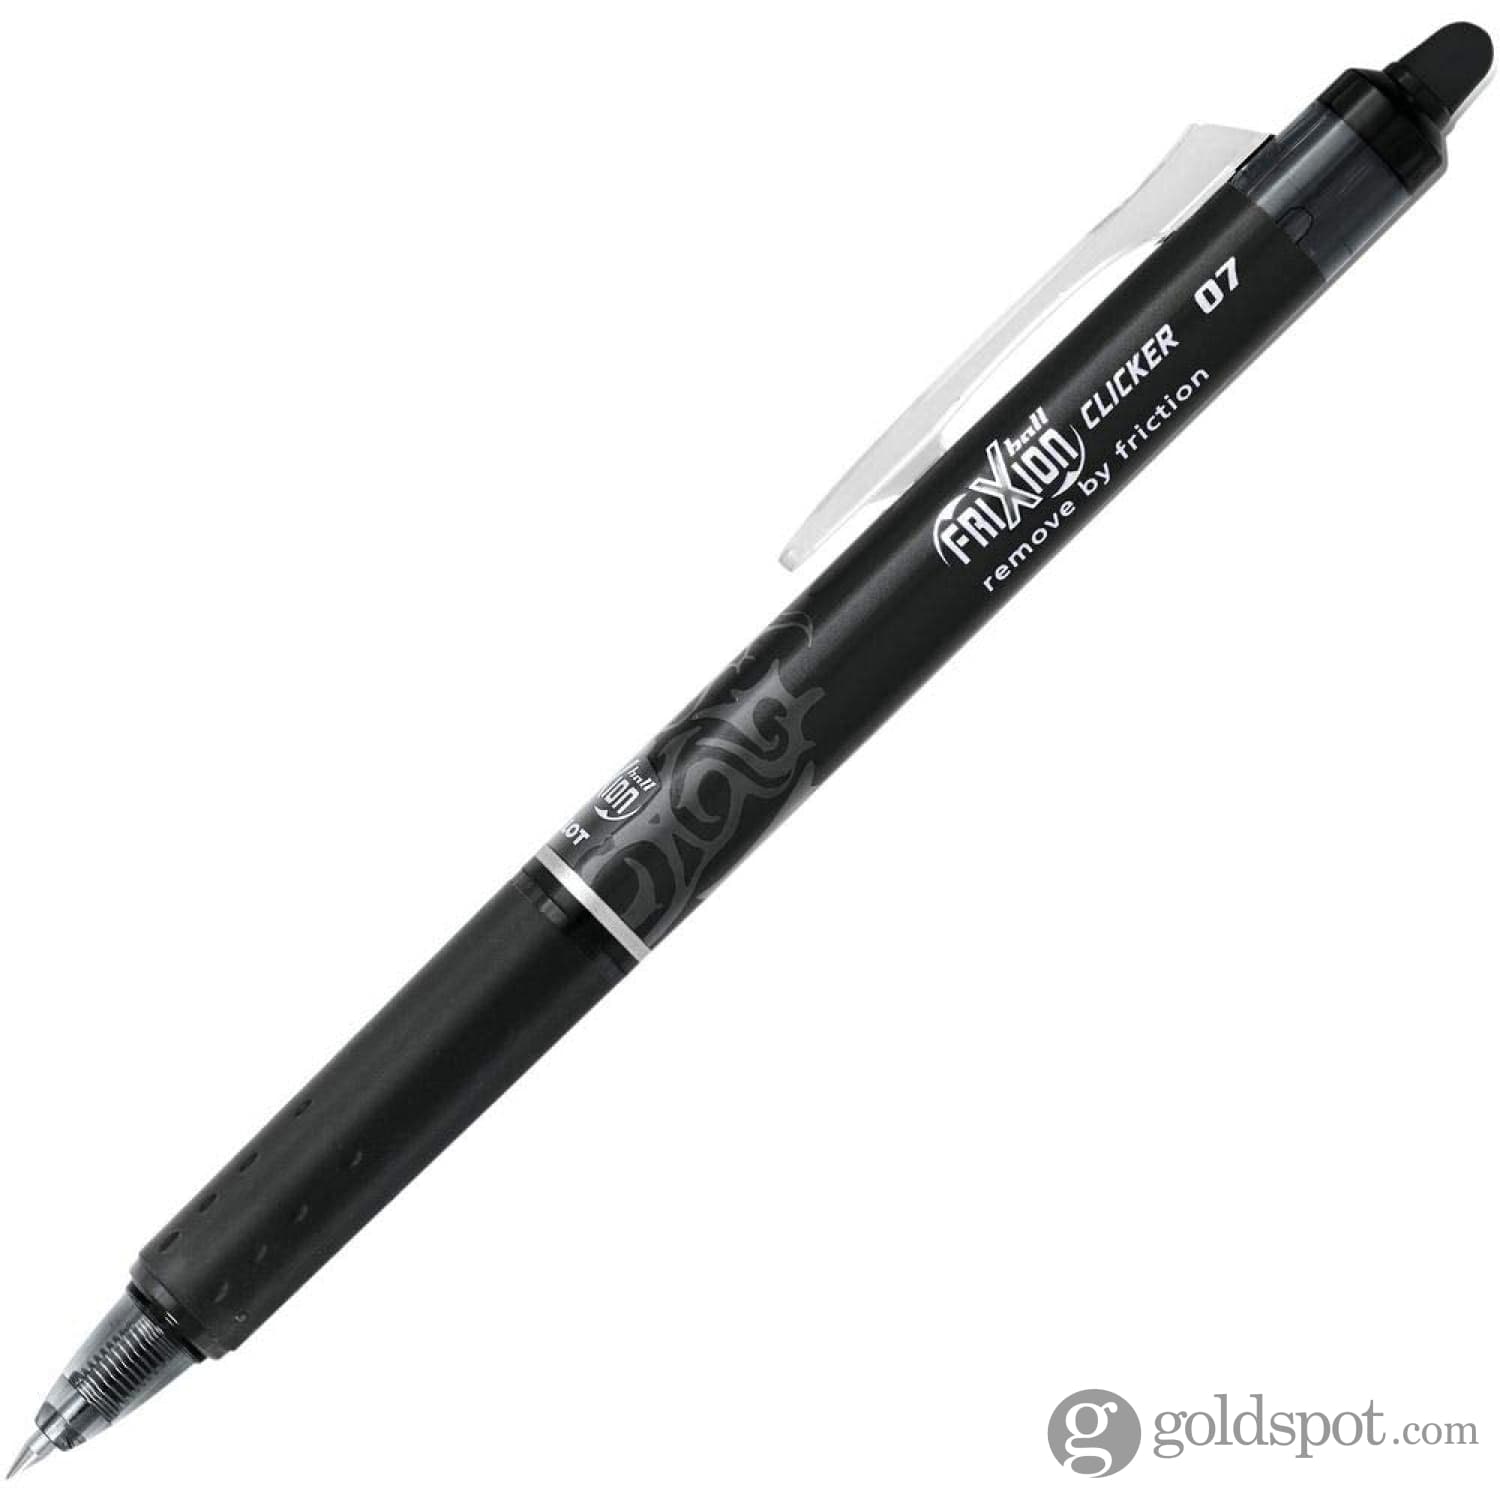 Pilot FriXion Erasable Gel-Ink Pens, Fine Point, Black - 3 pack